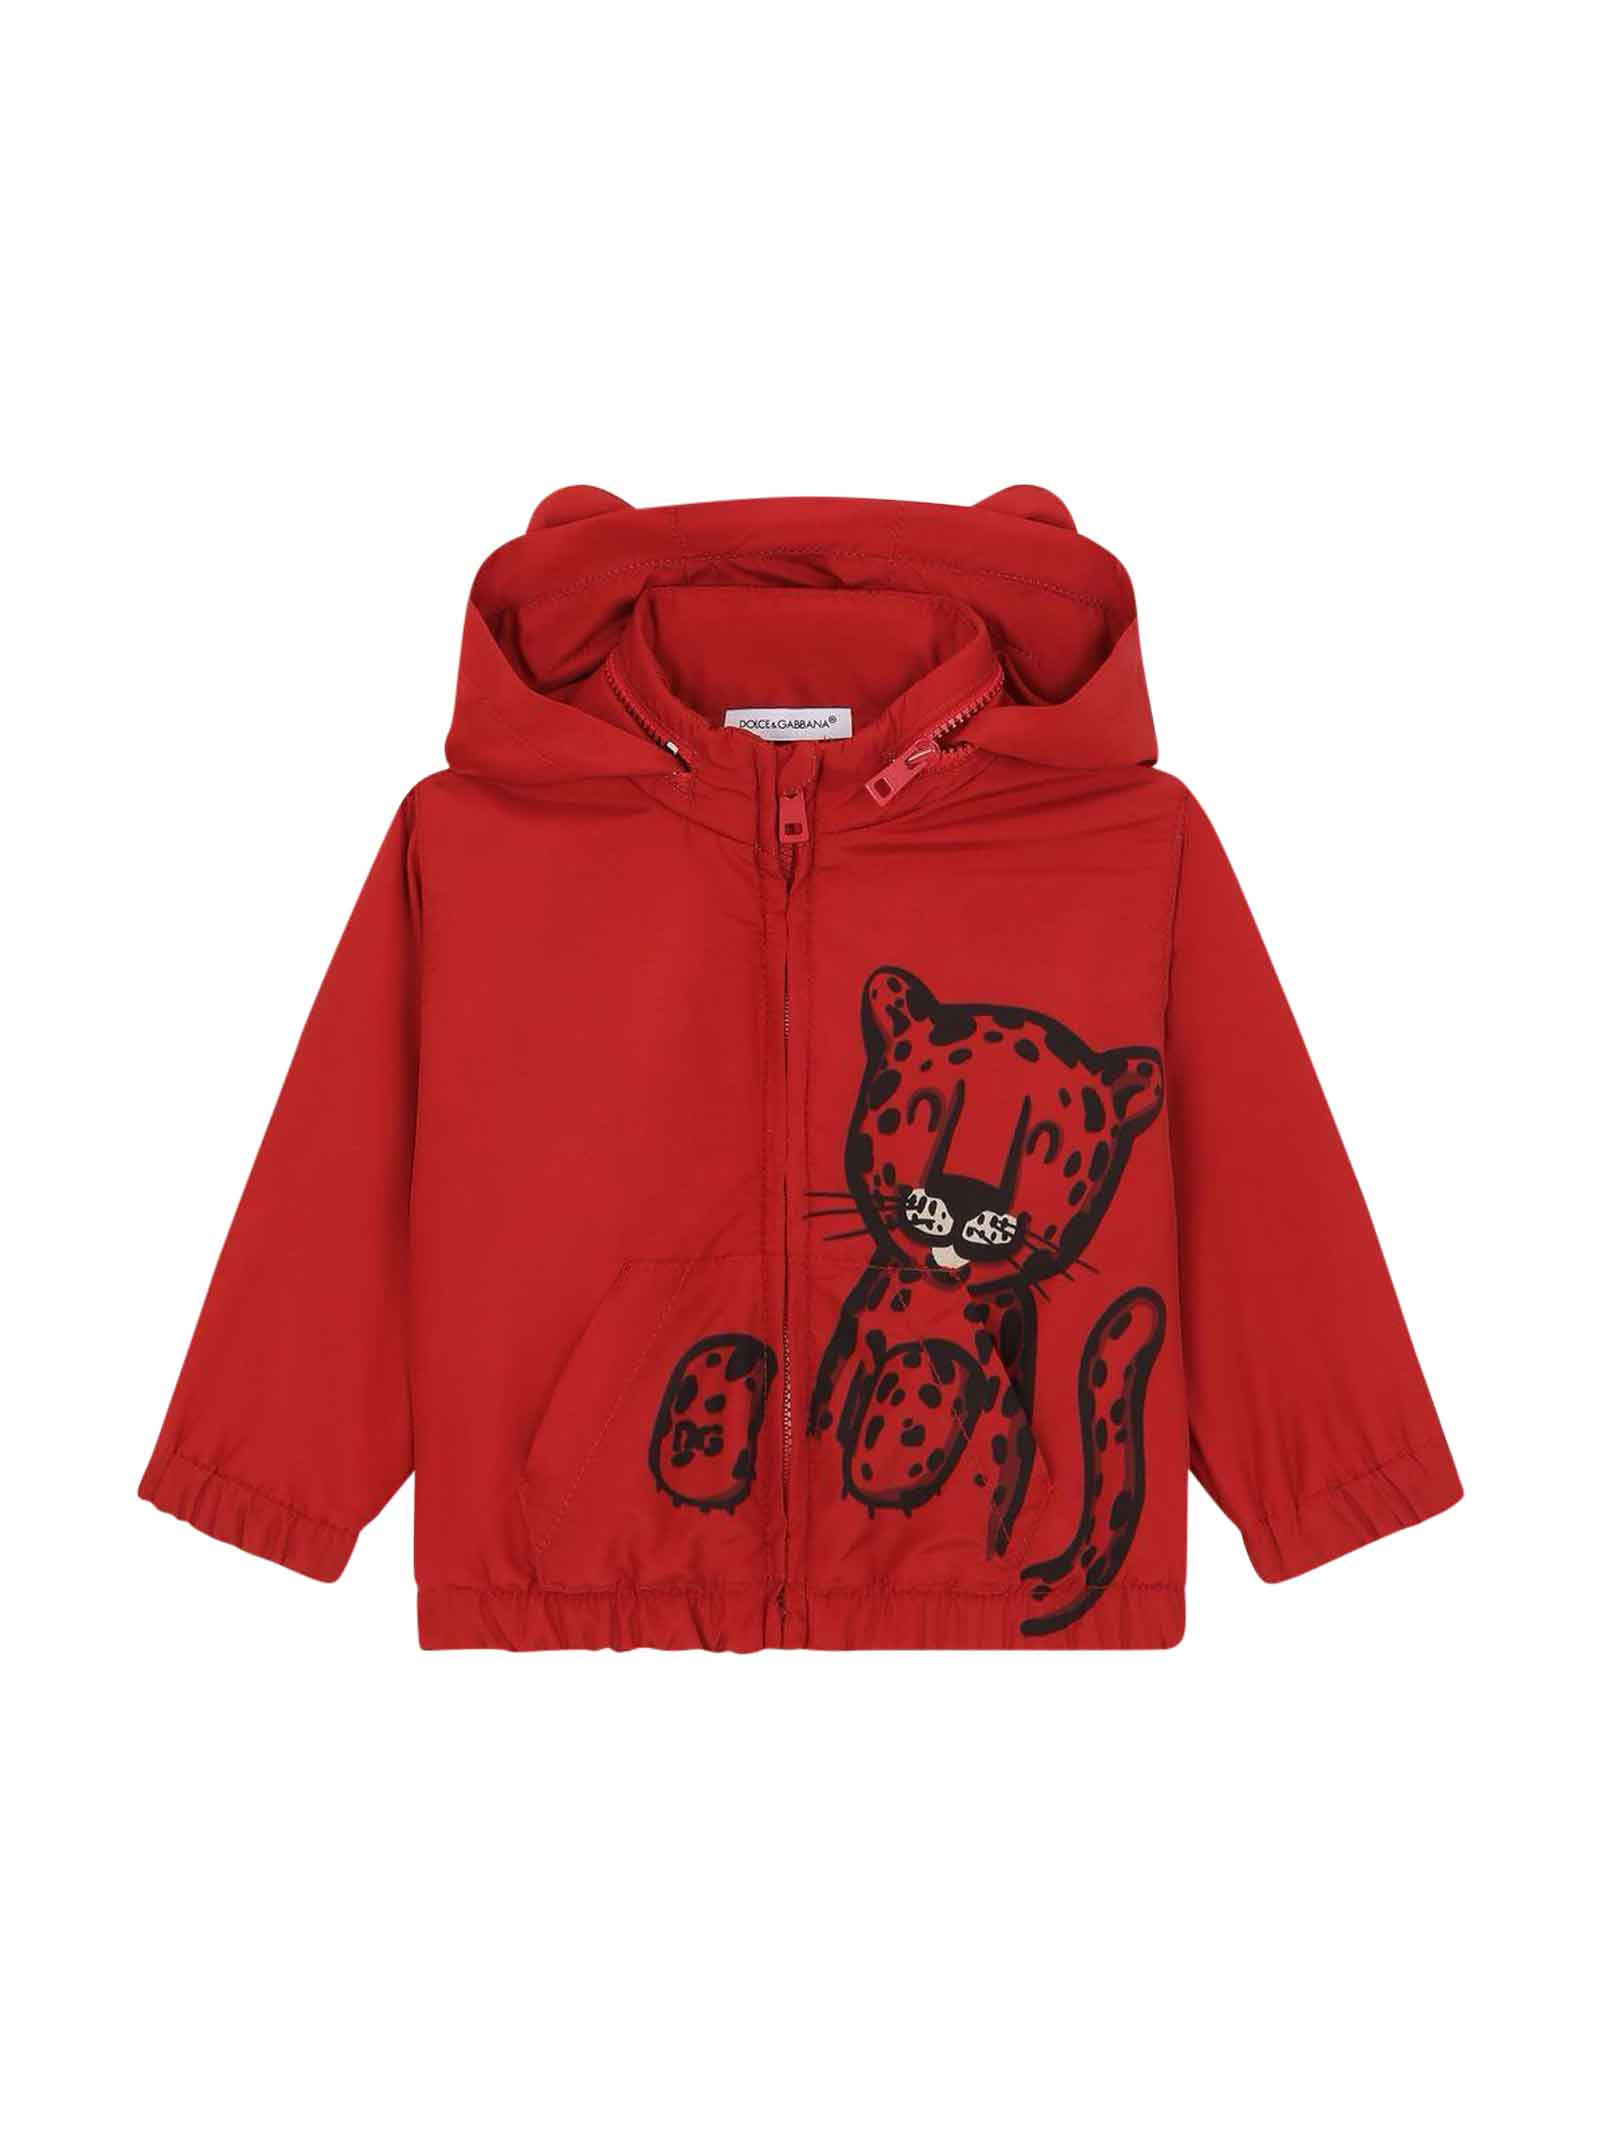 Dolce & Gabbana Red Newborn Sweatshirt